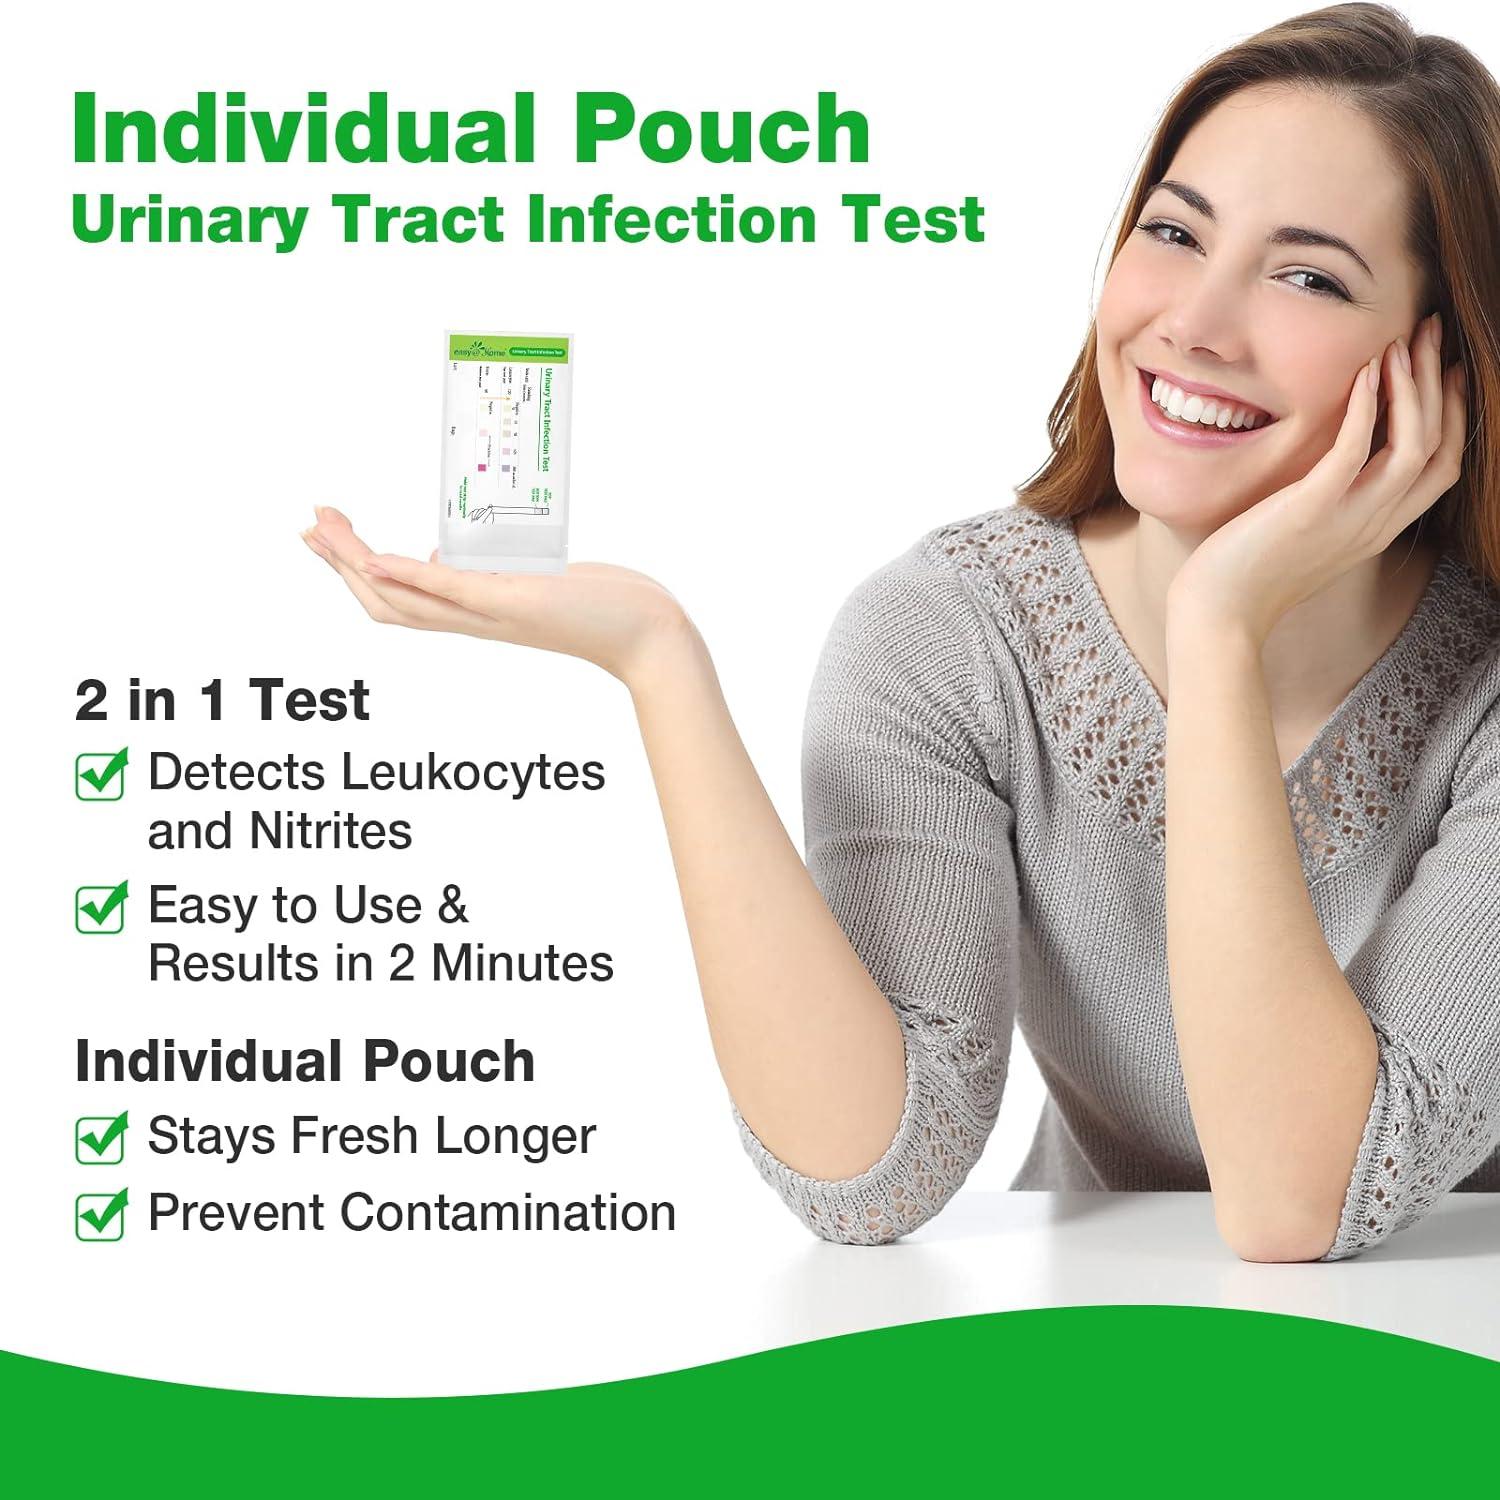 Easy@Home Individual Pouches Ketone Strips, FSA Eligible Urine Sticks